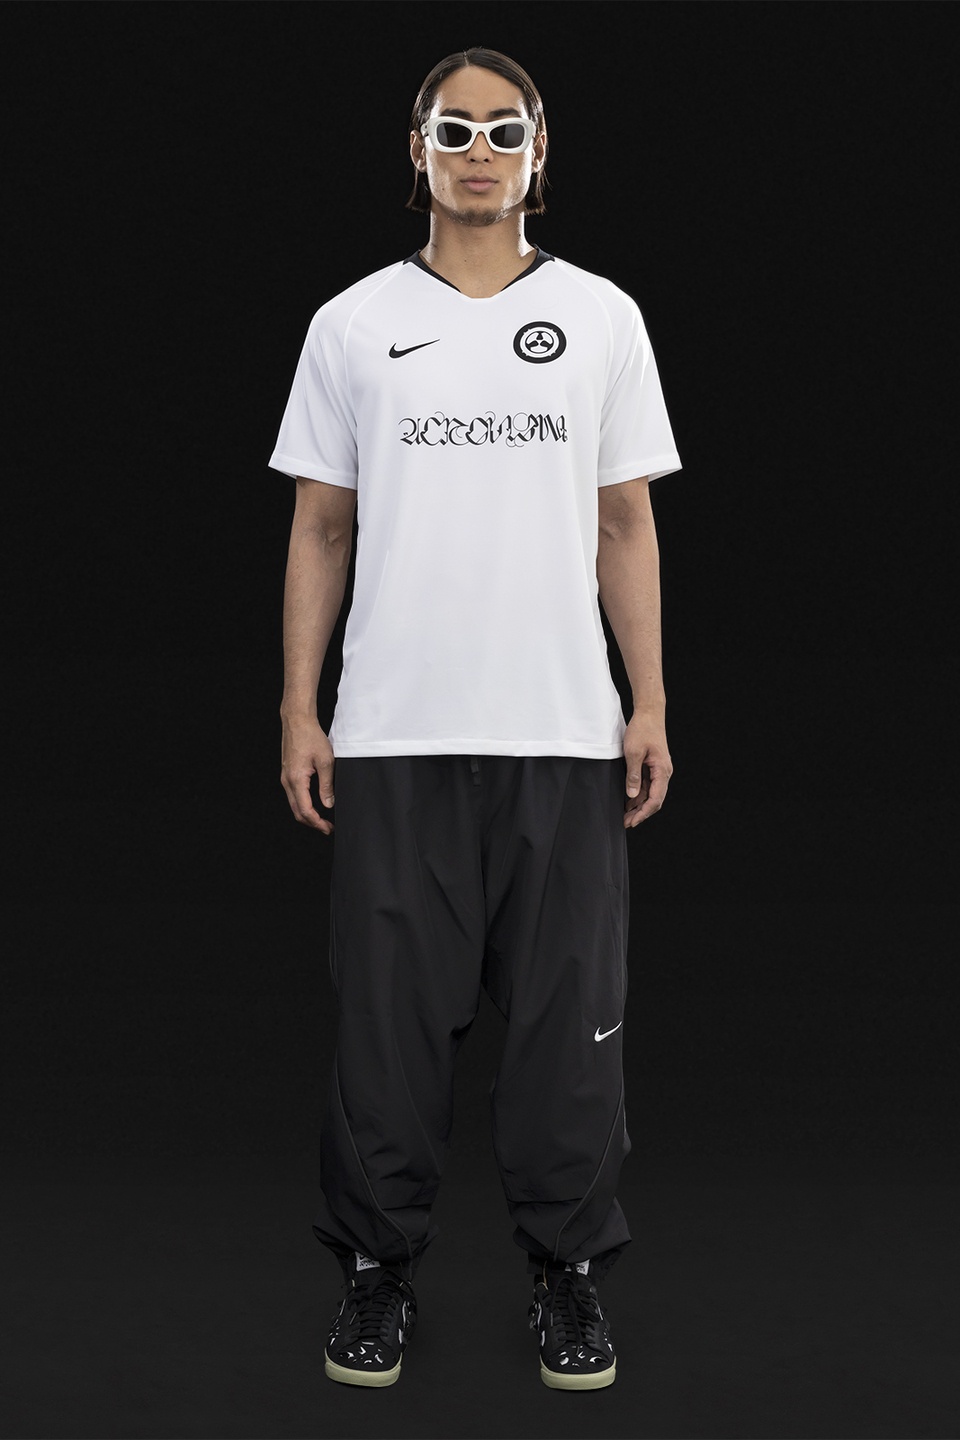 GGG-T1-100 Nike® Acronym® Stadium Jersey White/White - 1